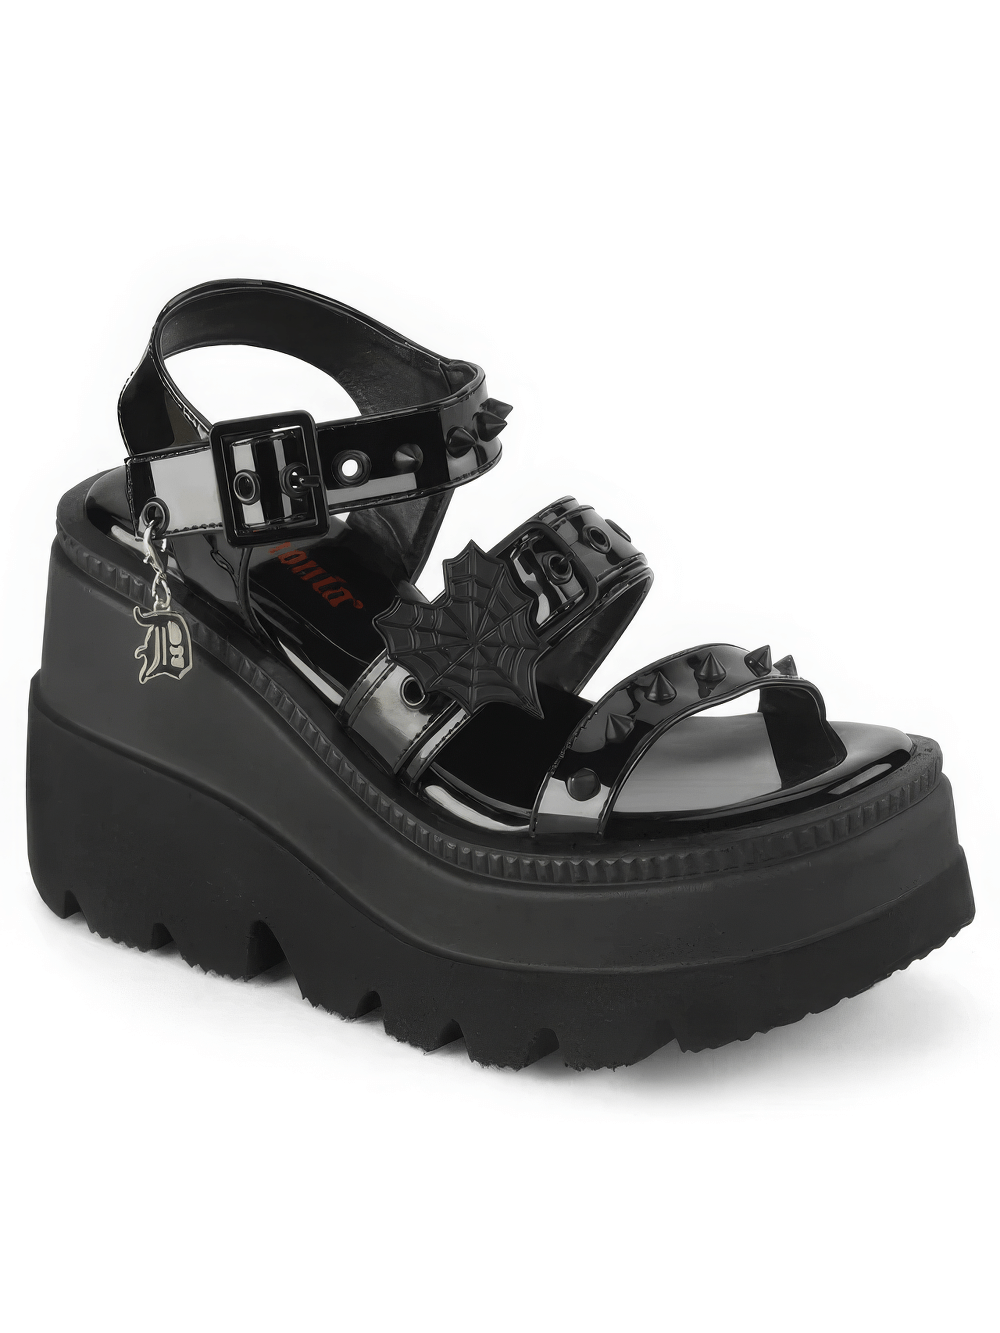 DEMONIA Black Patent Platform Sandals with Buckle Straps